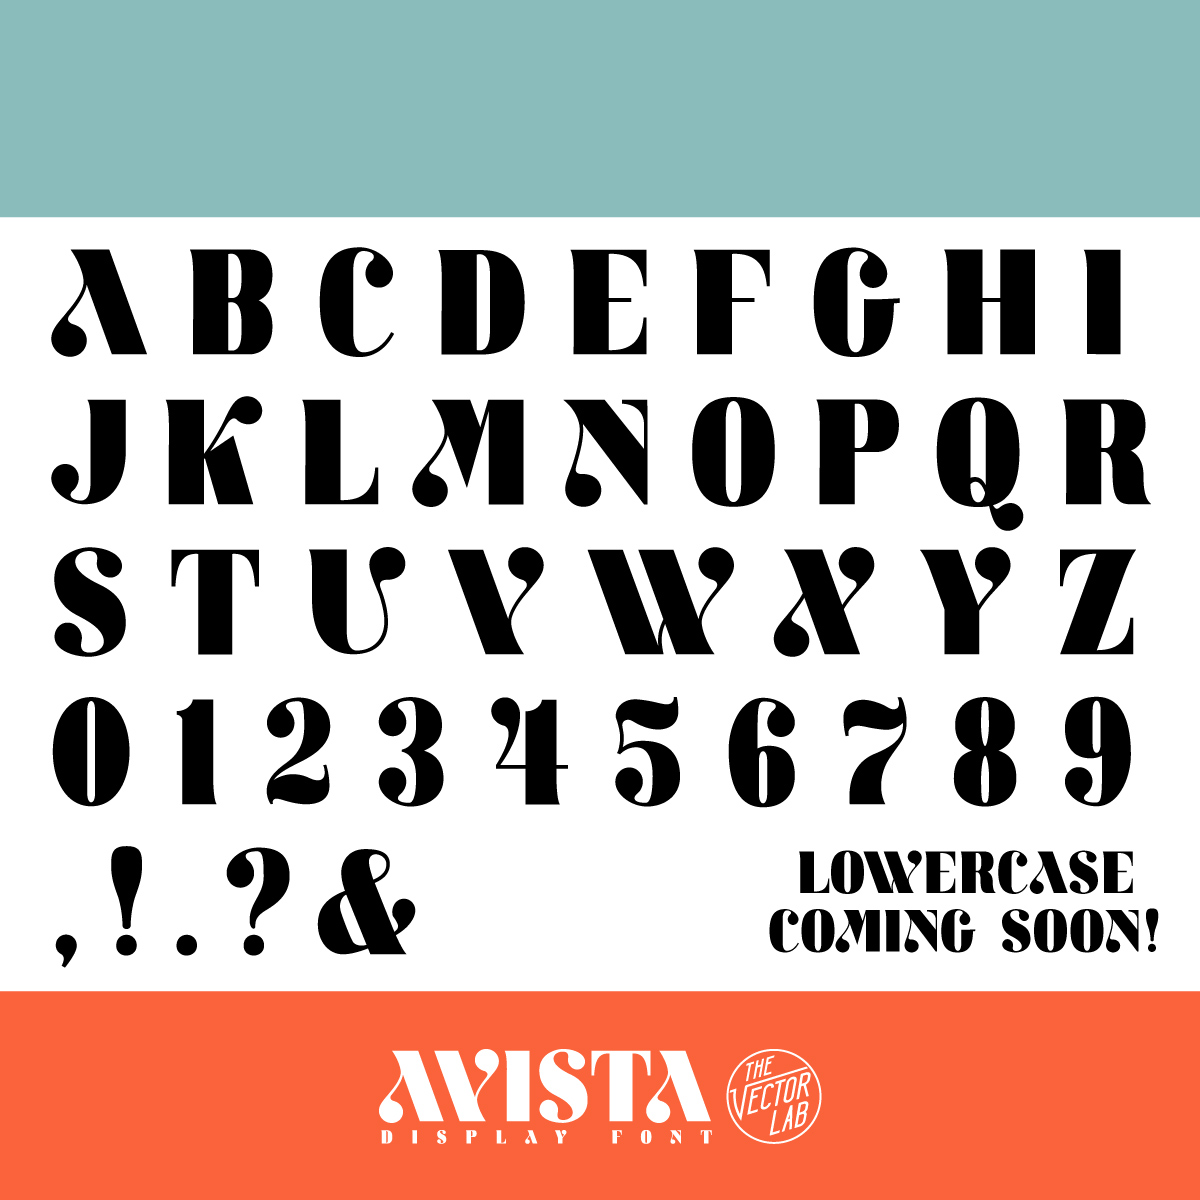 AVISTA font by Ray Dombroski & TheVectorLab